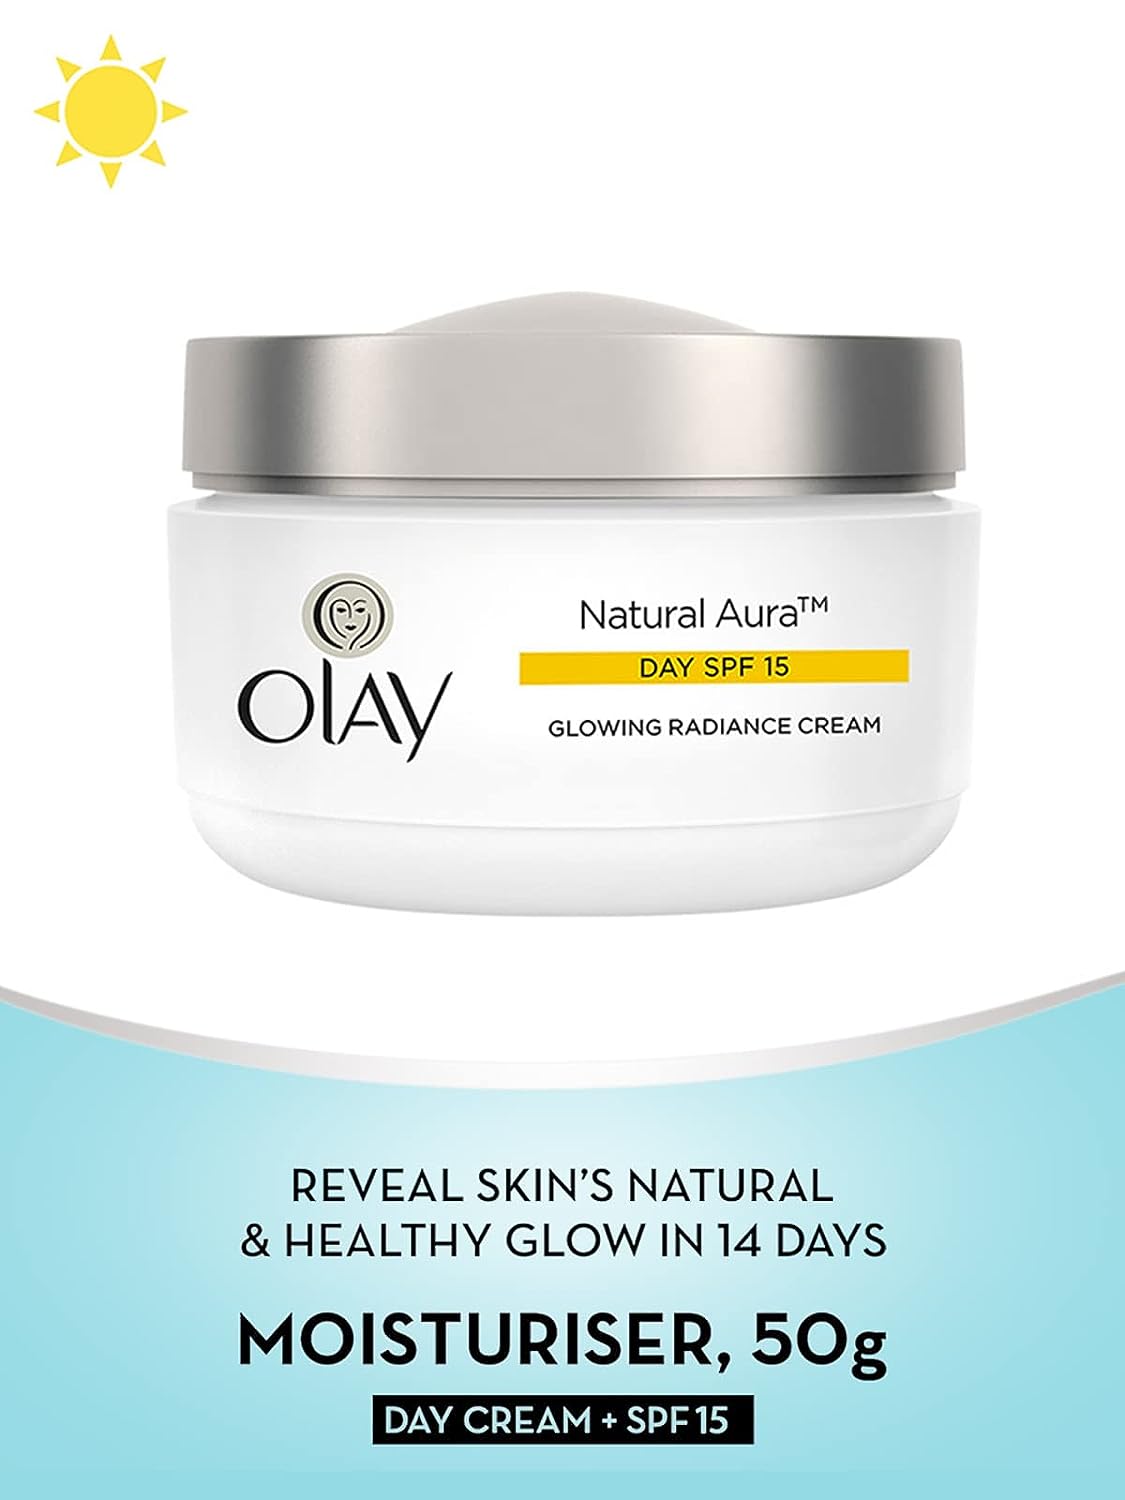 Olay Day Cream Natural Aura Glowing Radiance Cream SPF 15, 50g